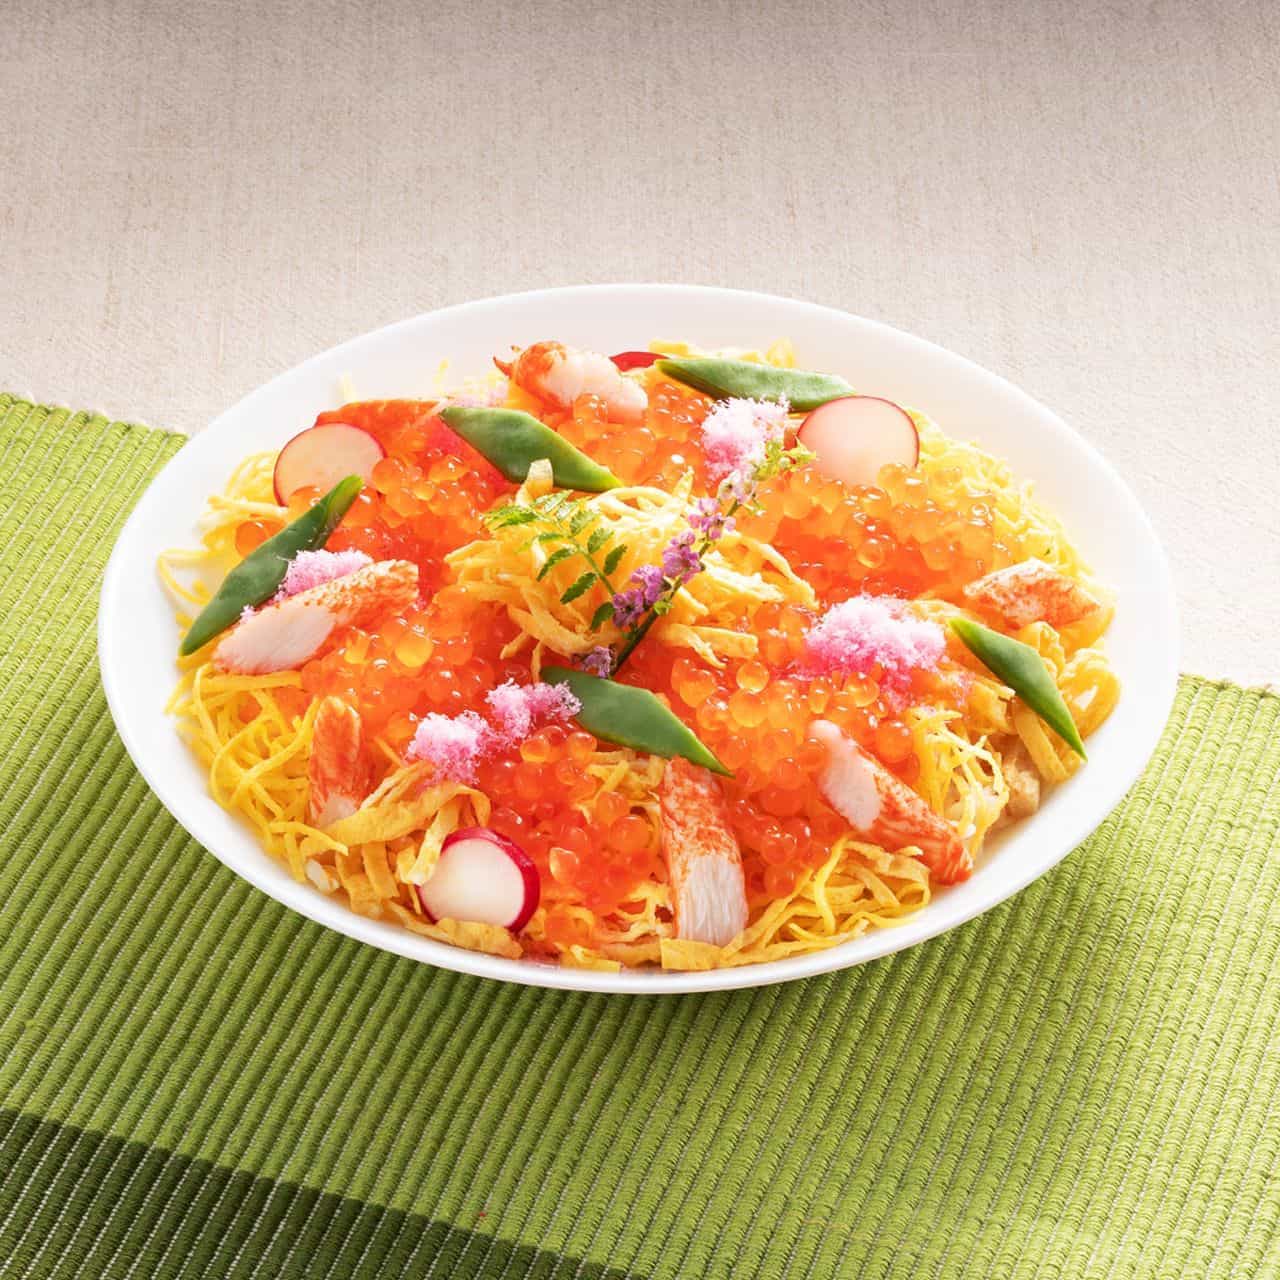 Chirashi Sushi using "Almost Salmon Roe" from Kanetsu Delicatessen Foods